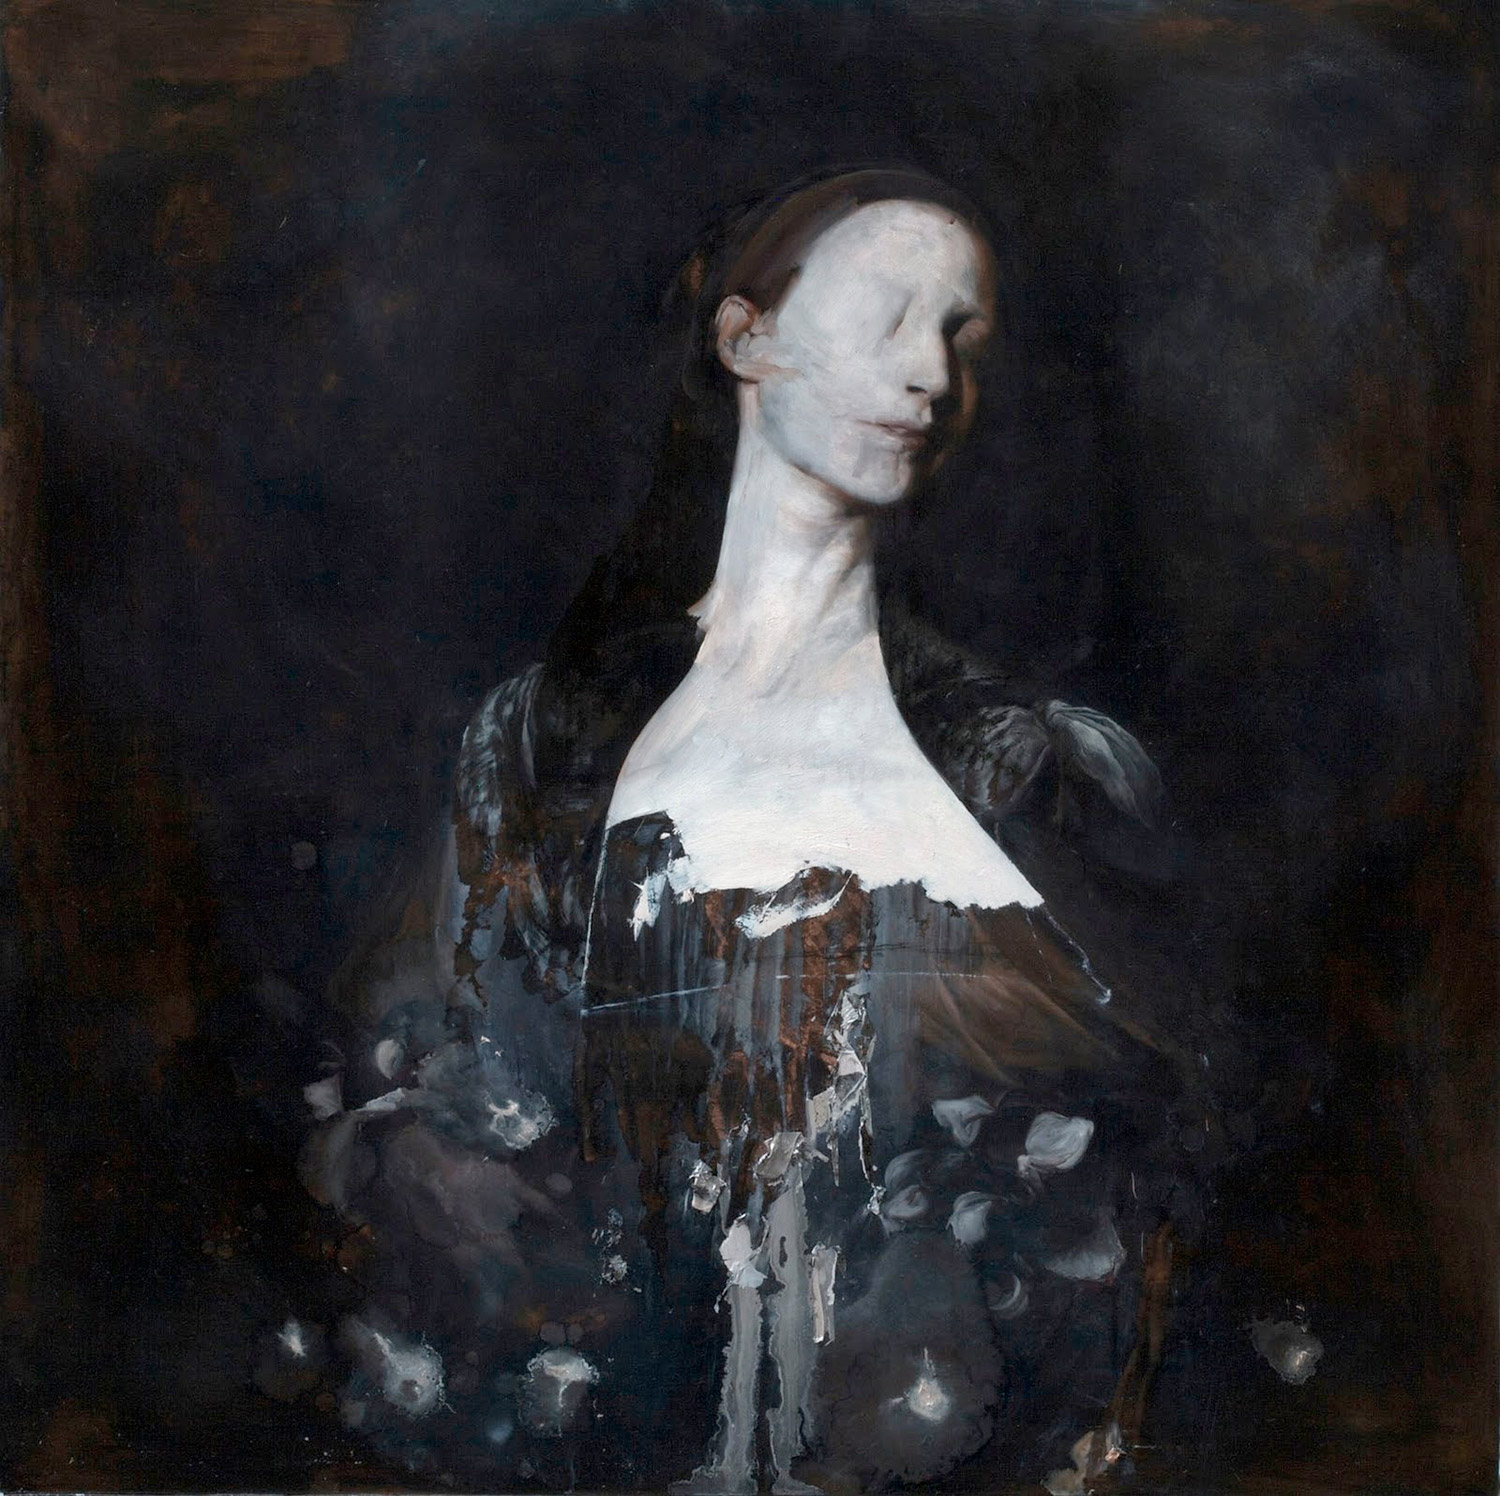 The Nature Of Fear Nicola Samori Painting Horror Baroque Portraiture Classical 1500x1496